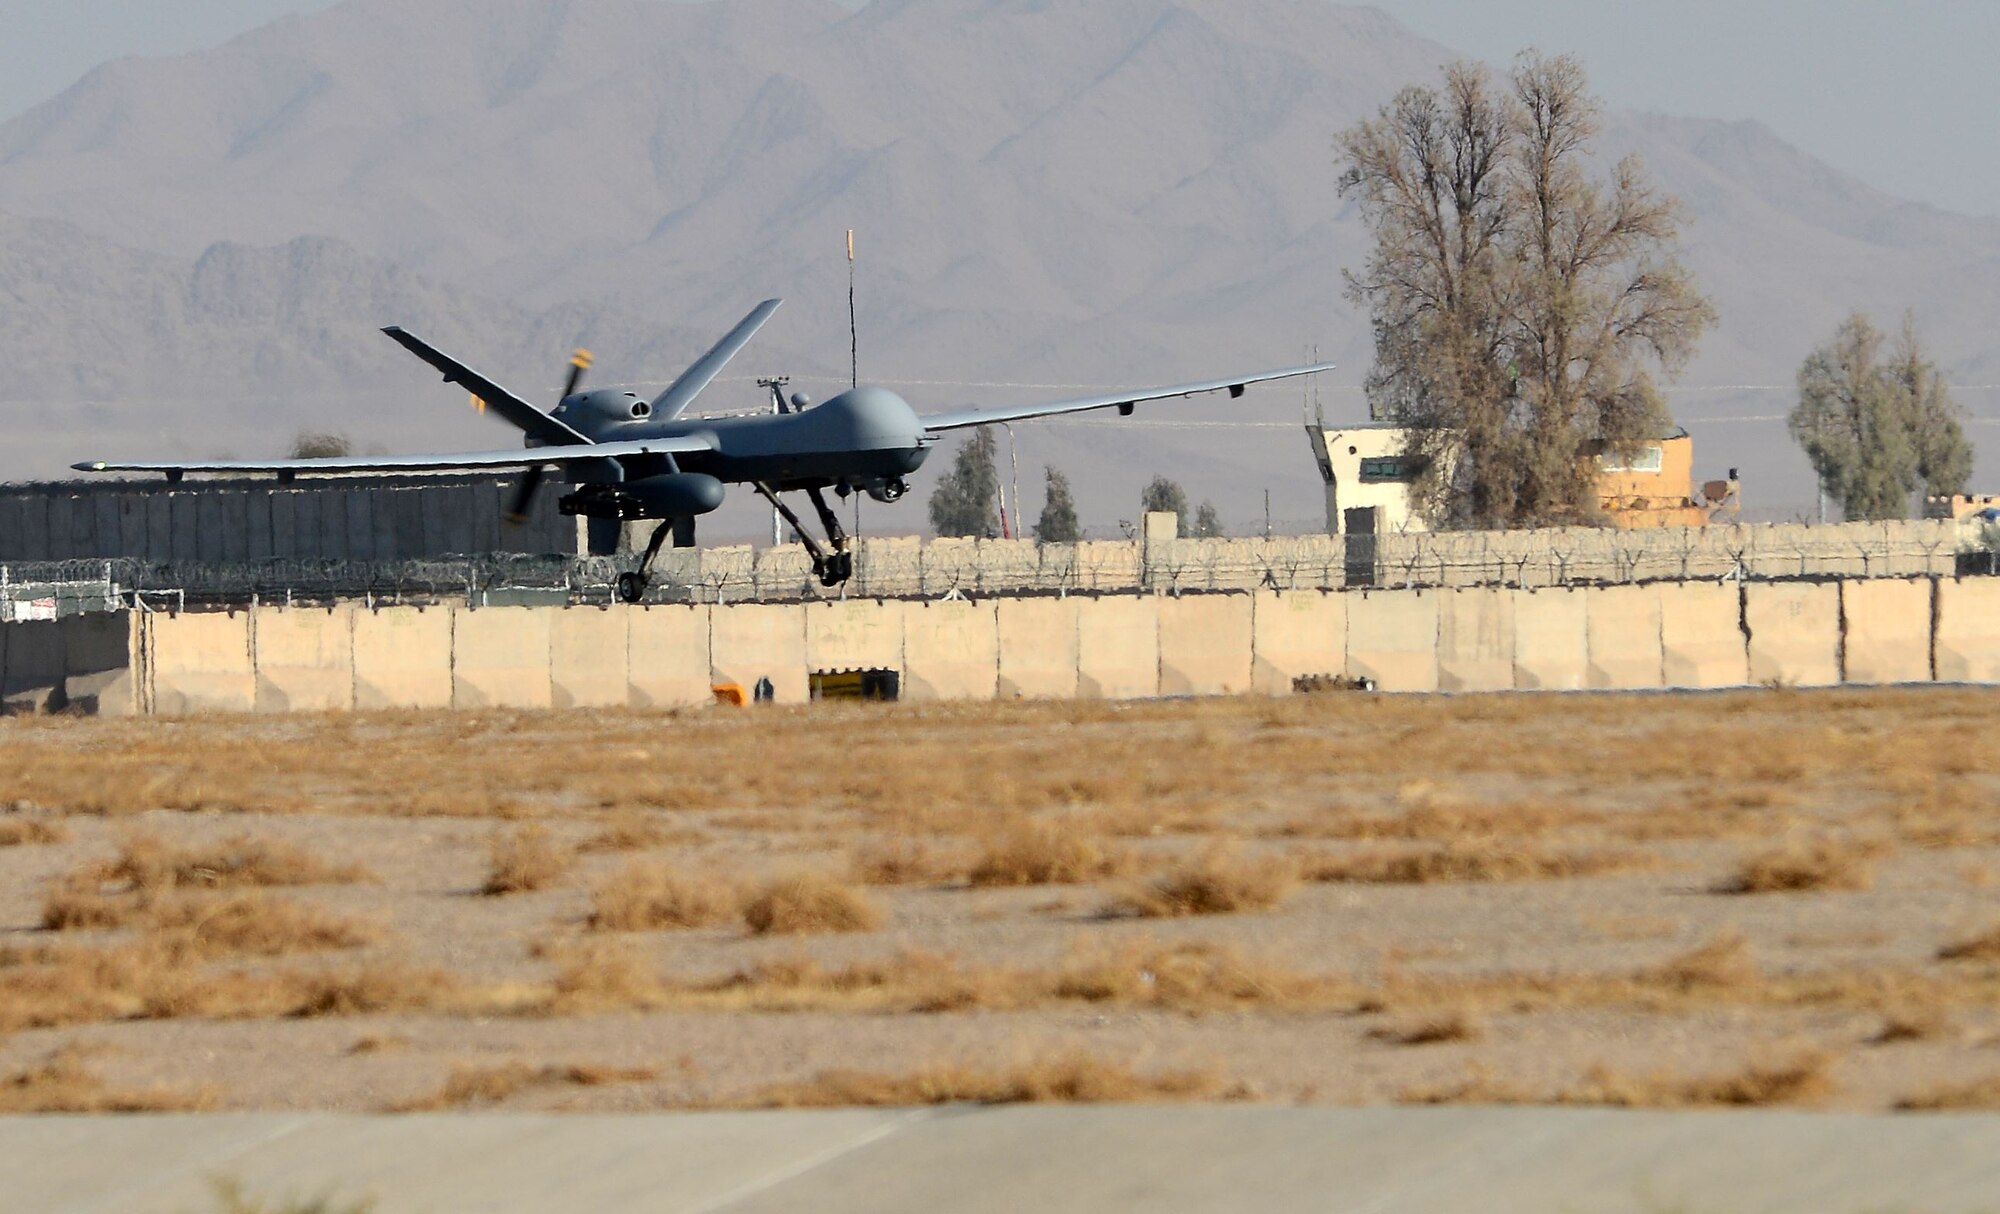 An MQ-9 Reaper lands on the runway Nov. 27, 2017 at Kandahar Airfield, Afghanistan.